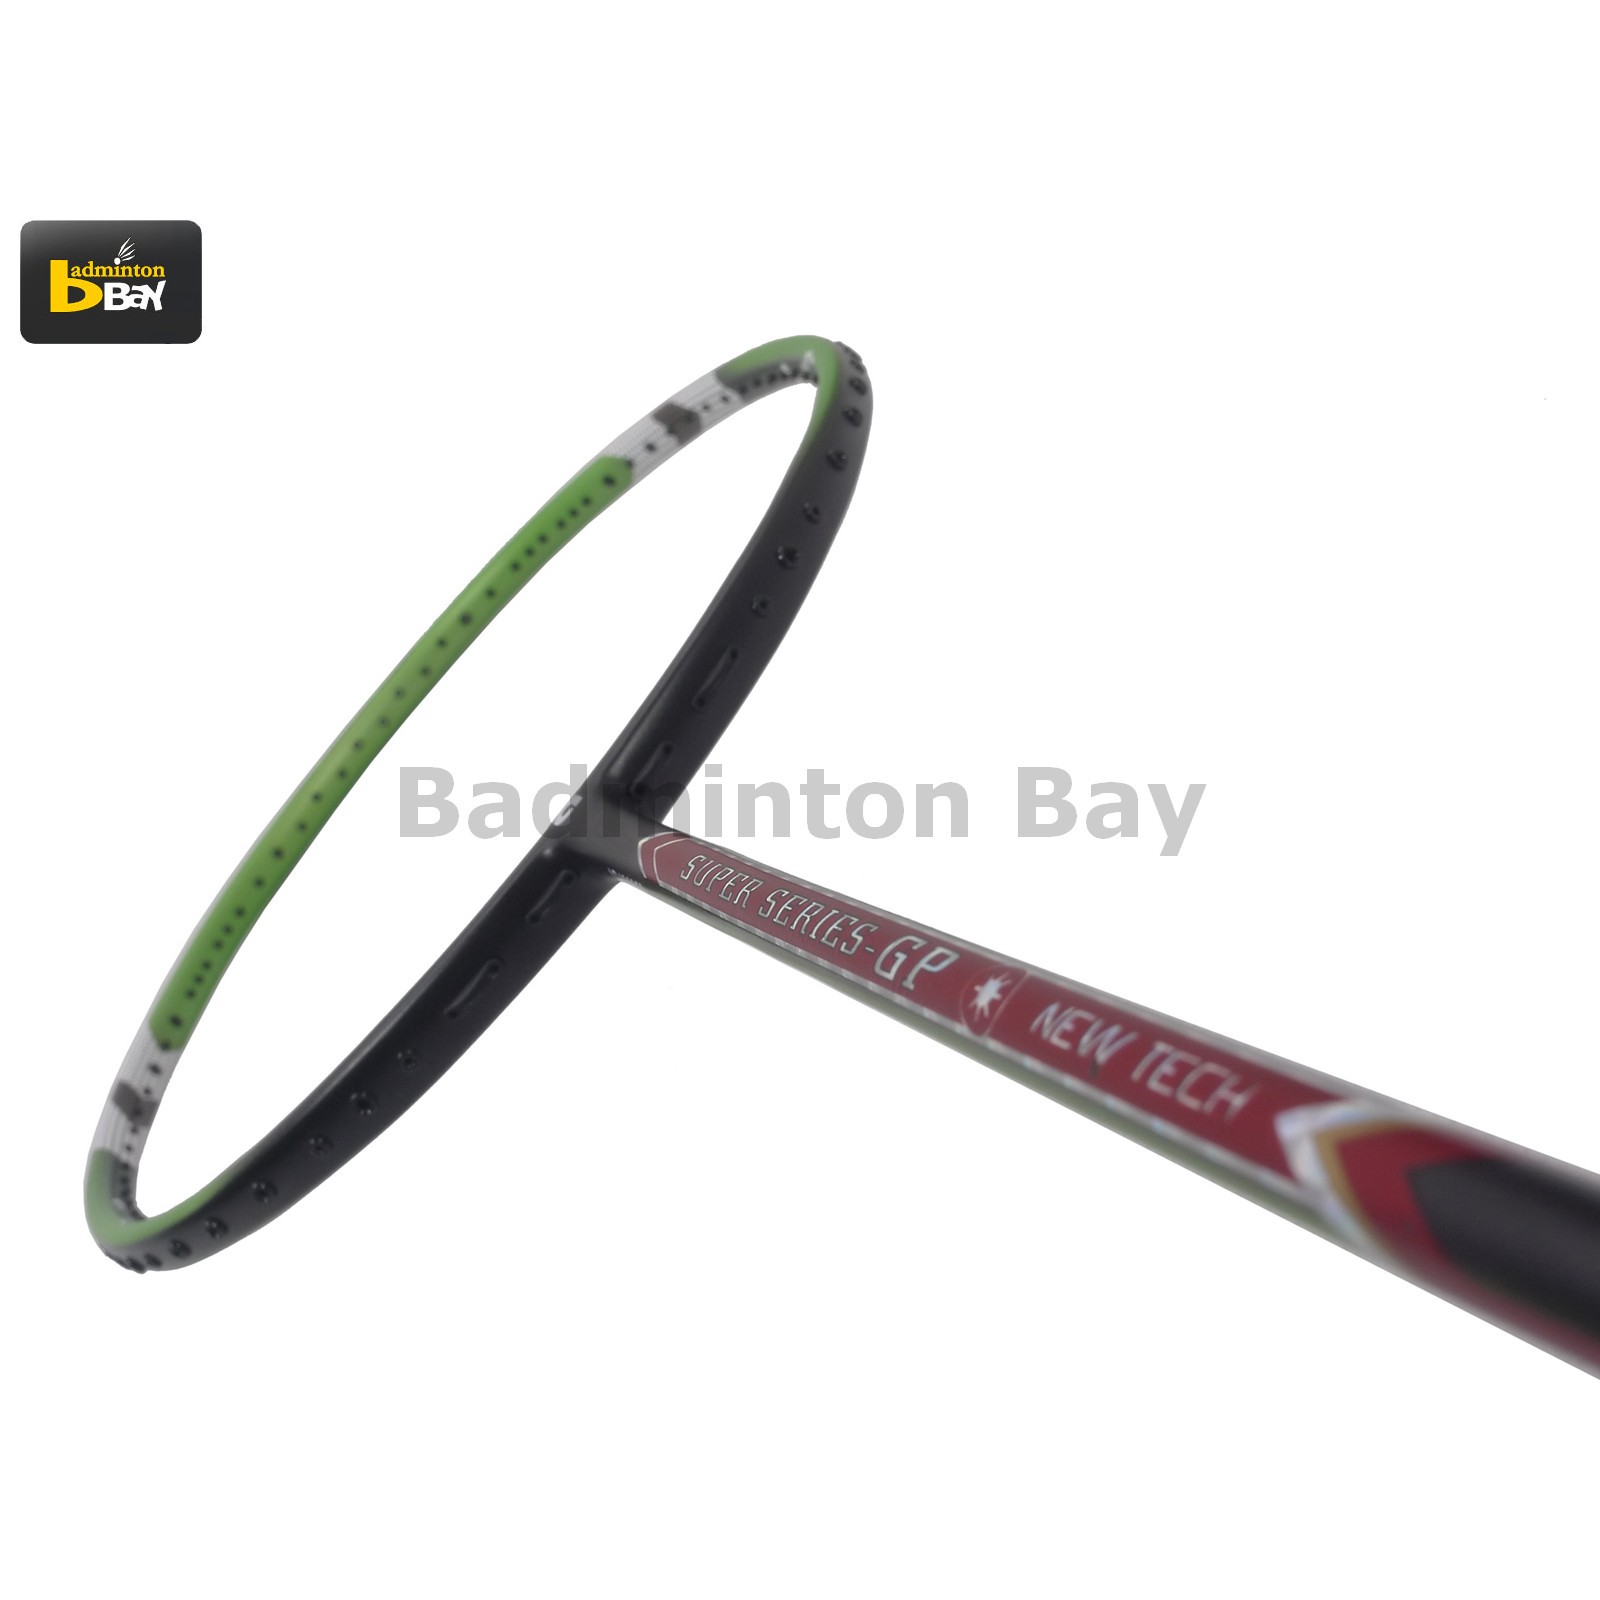 Apacs Badminton Racket Super Series GP Green